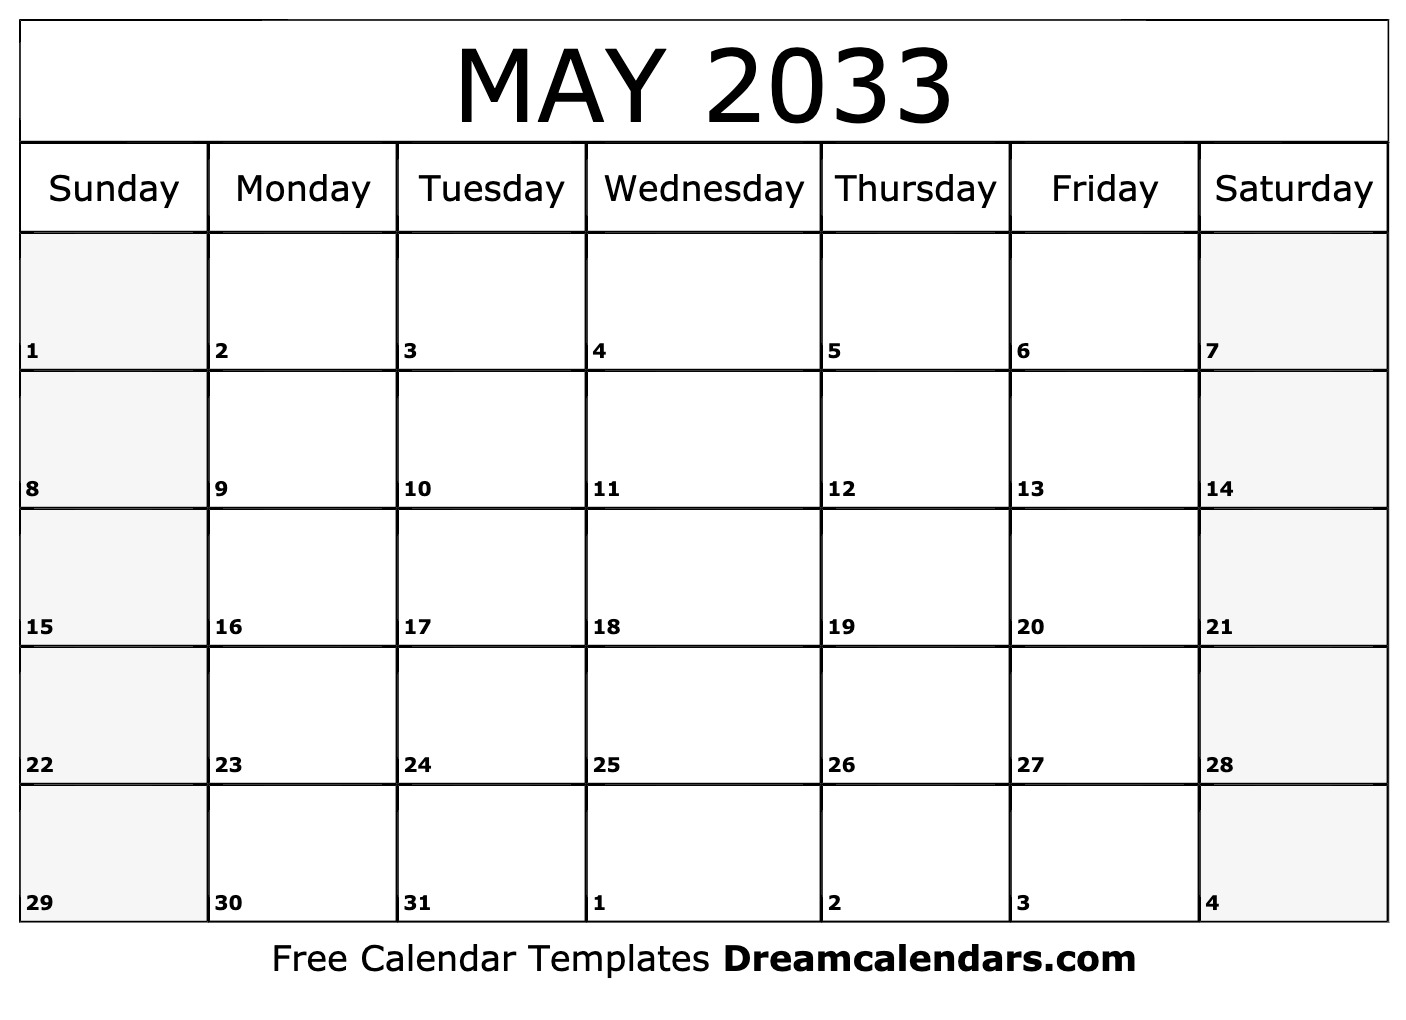 may-2033-calendar-free-blank-printable-with-holidays